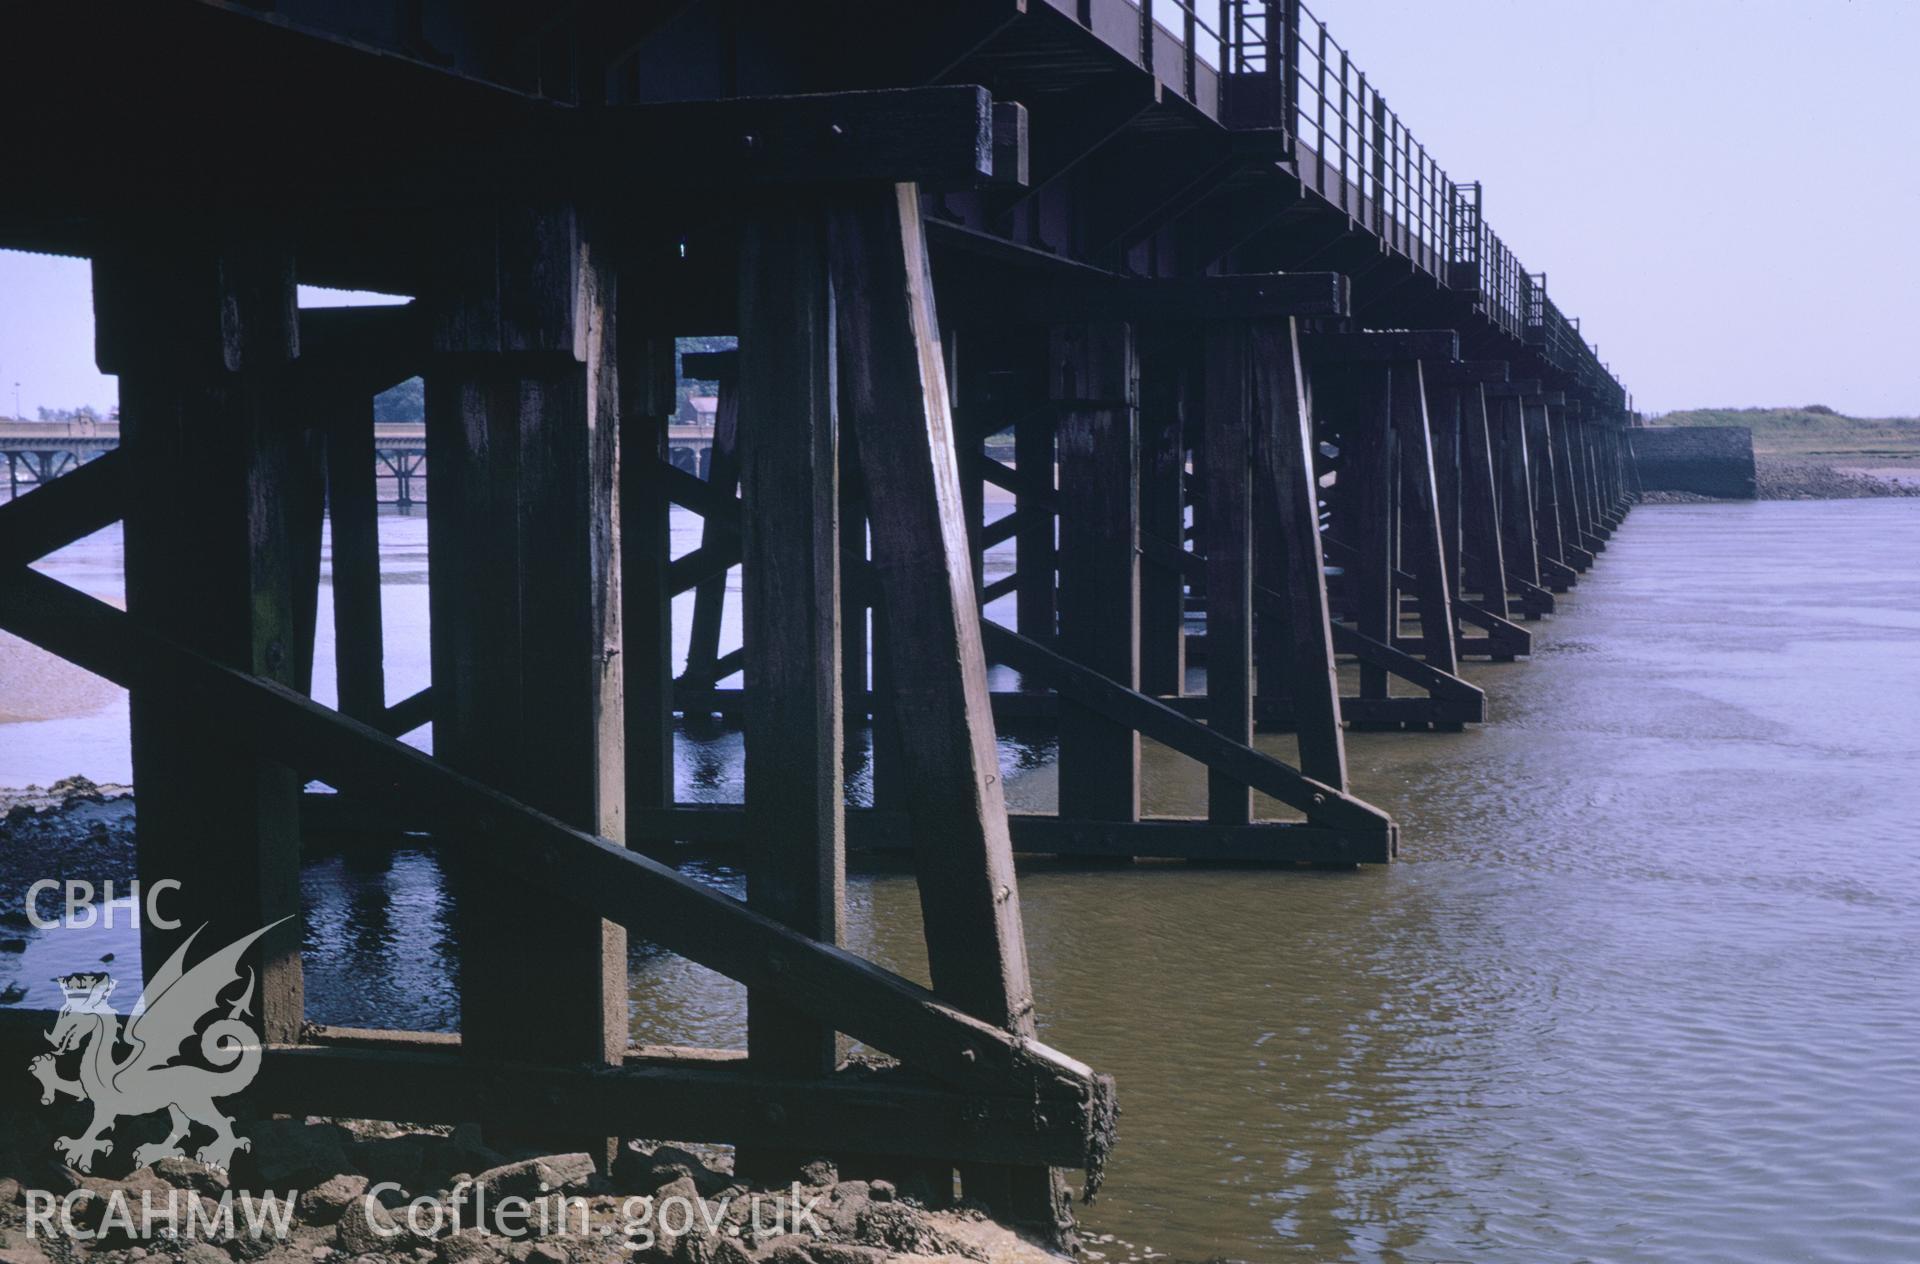 35mm slide of Loughor Railway Bridge, Carmarthenshire and Glamorgan, by Dylan Roberts.